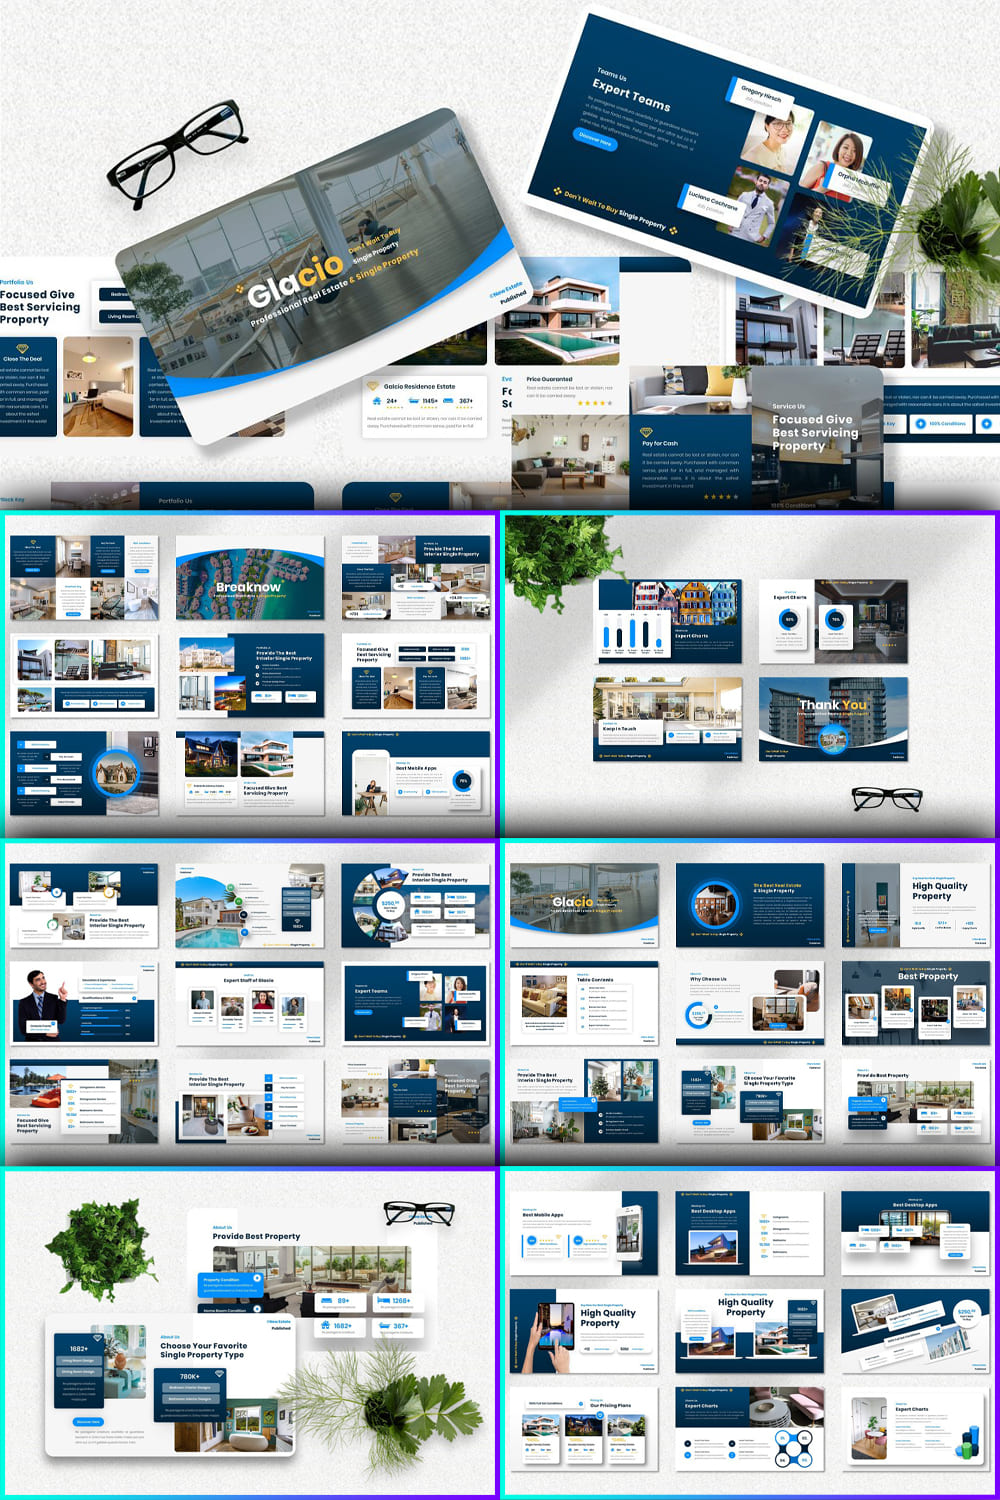 Glacio - Real Estate Keynote pinterest image preview.